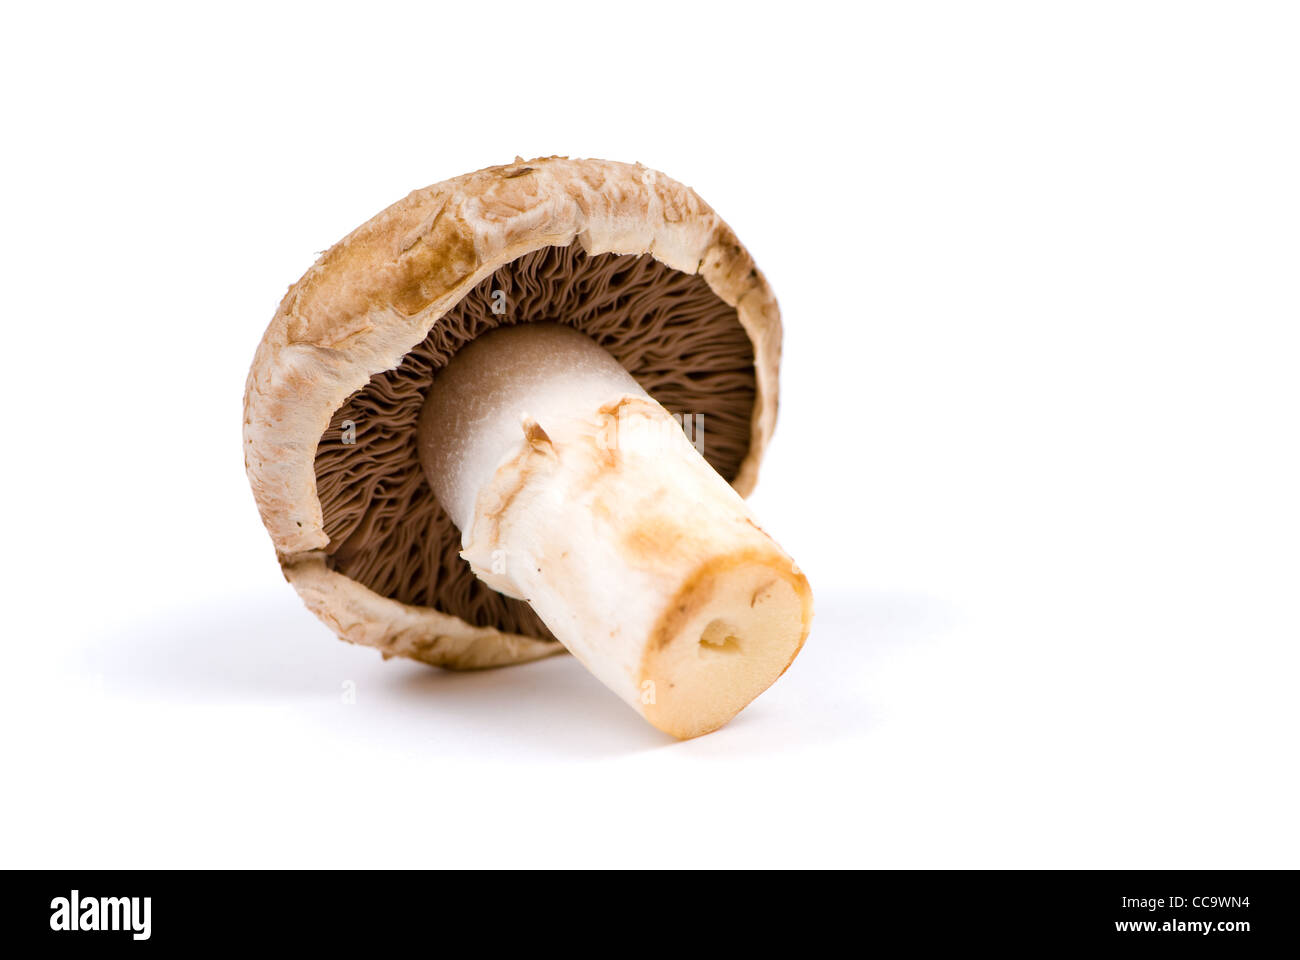 isolated brown champignon mushroom on white background Stock Photo